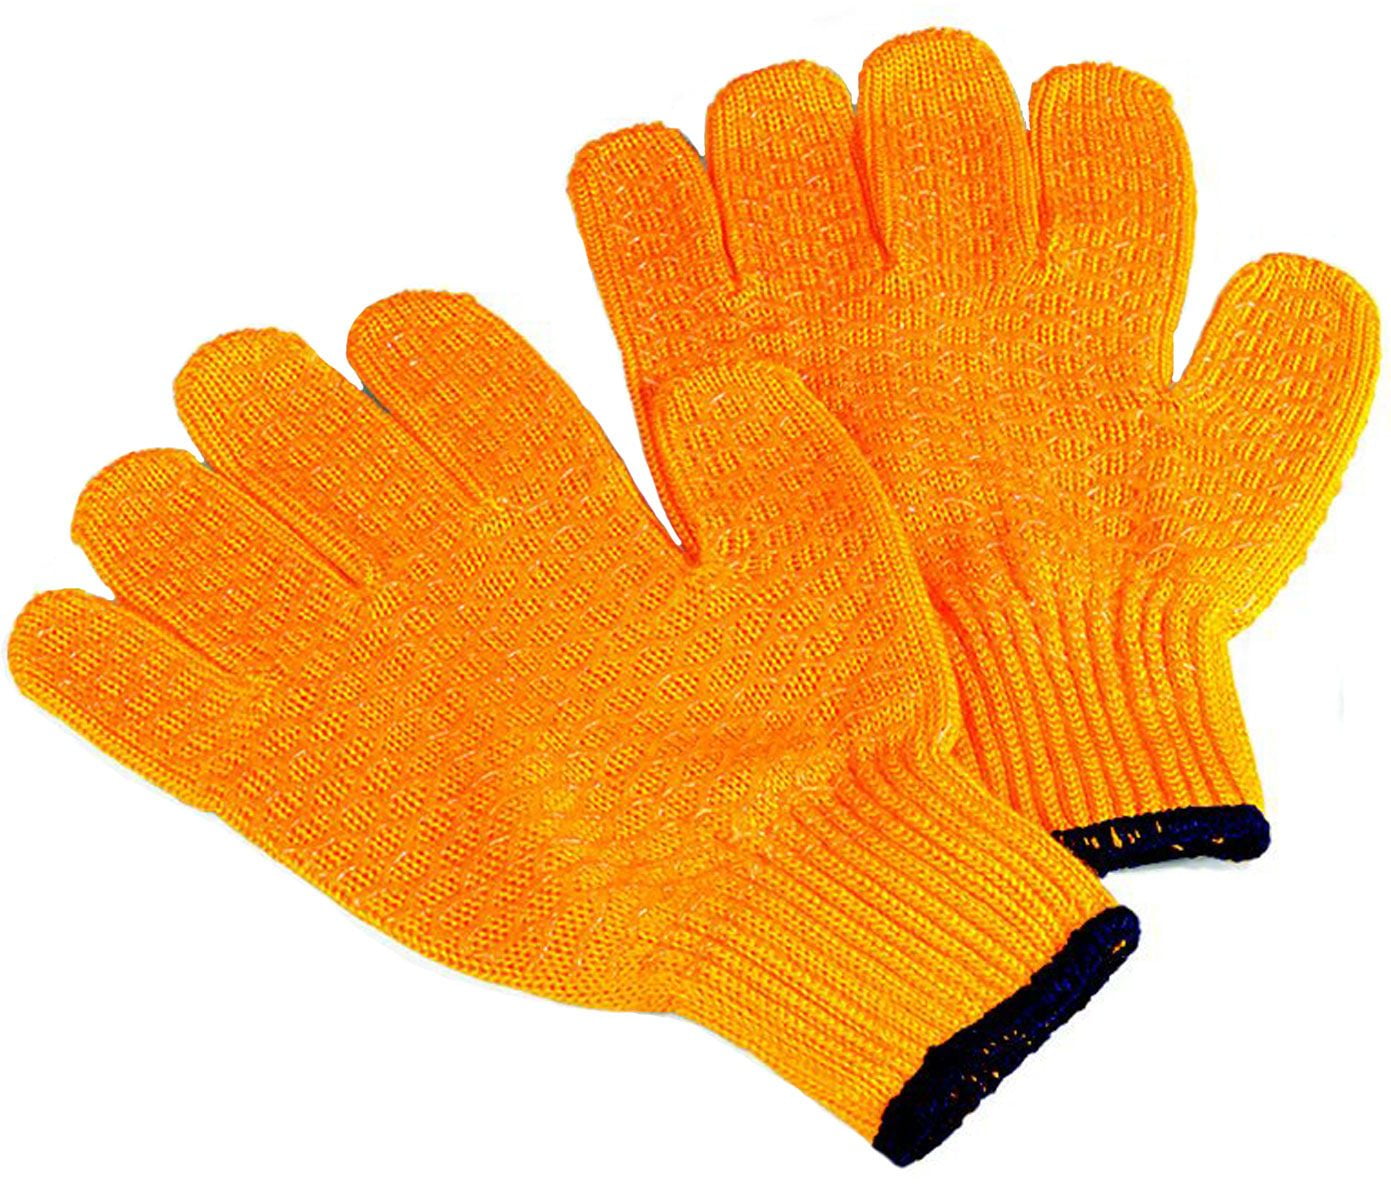 Tsunami Orange Grip Glove, Size Large